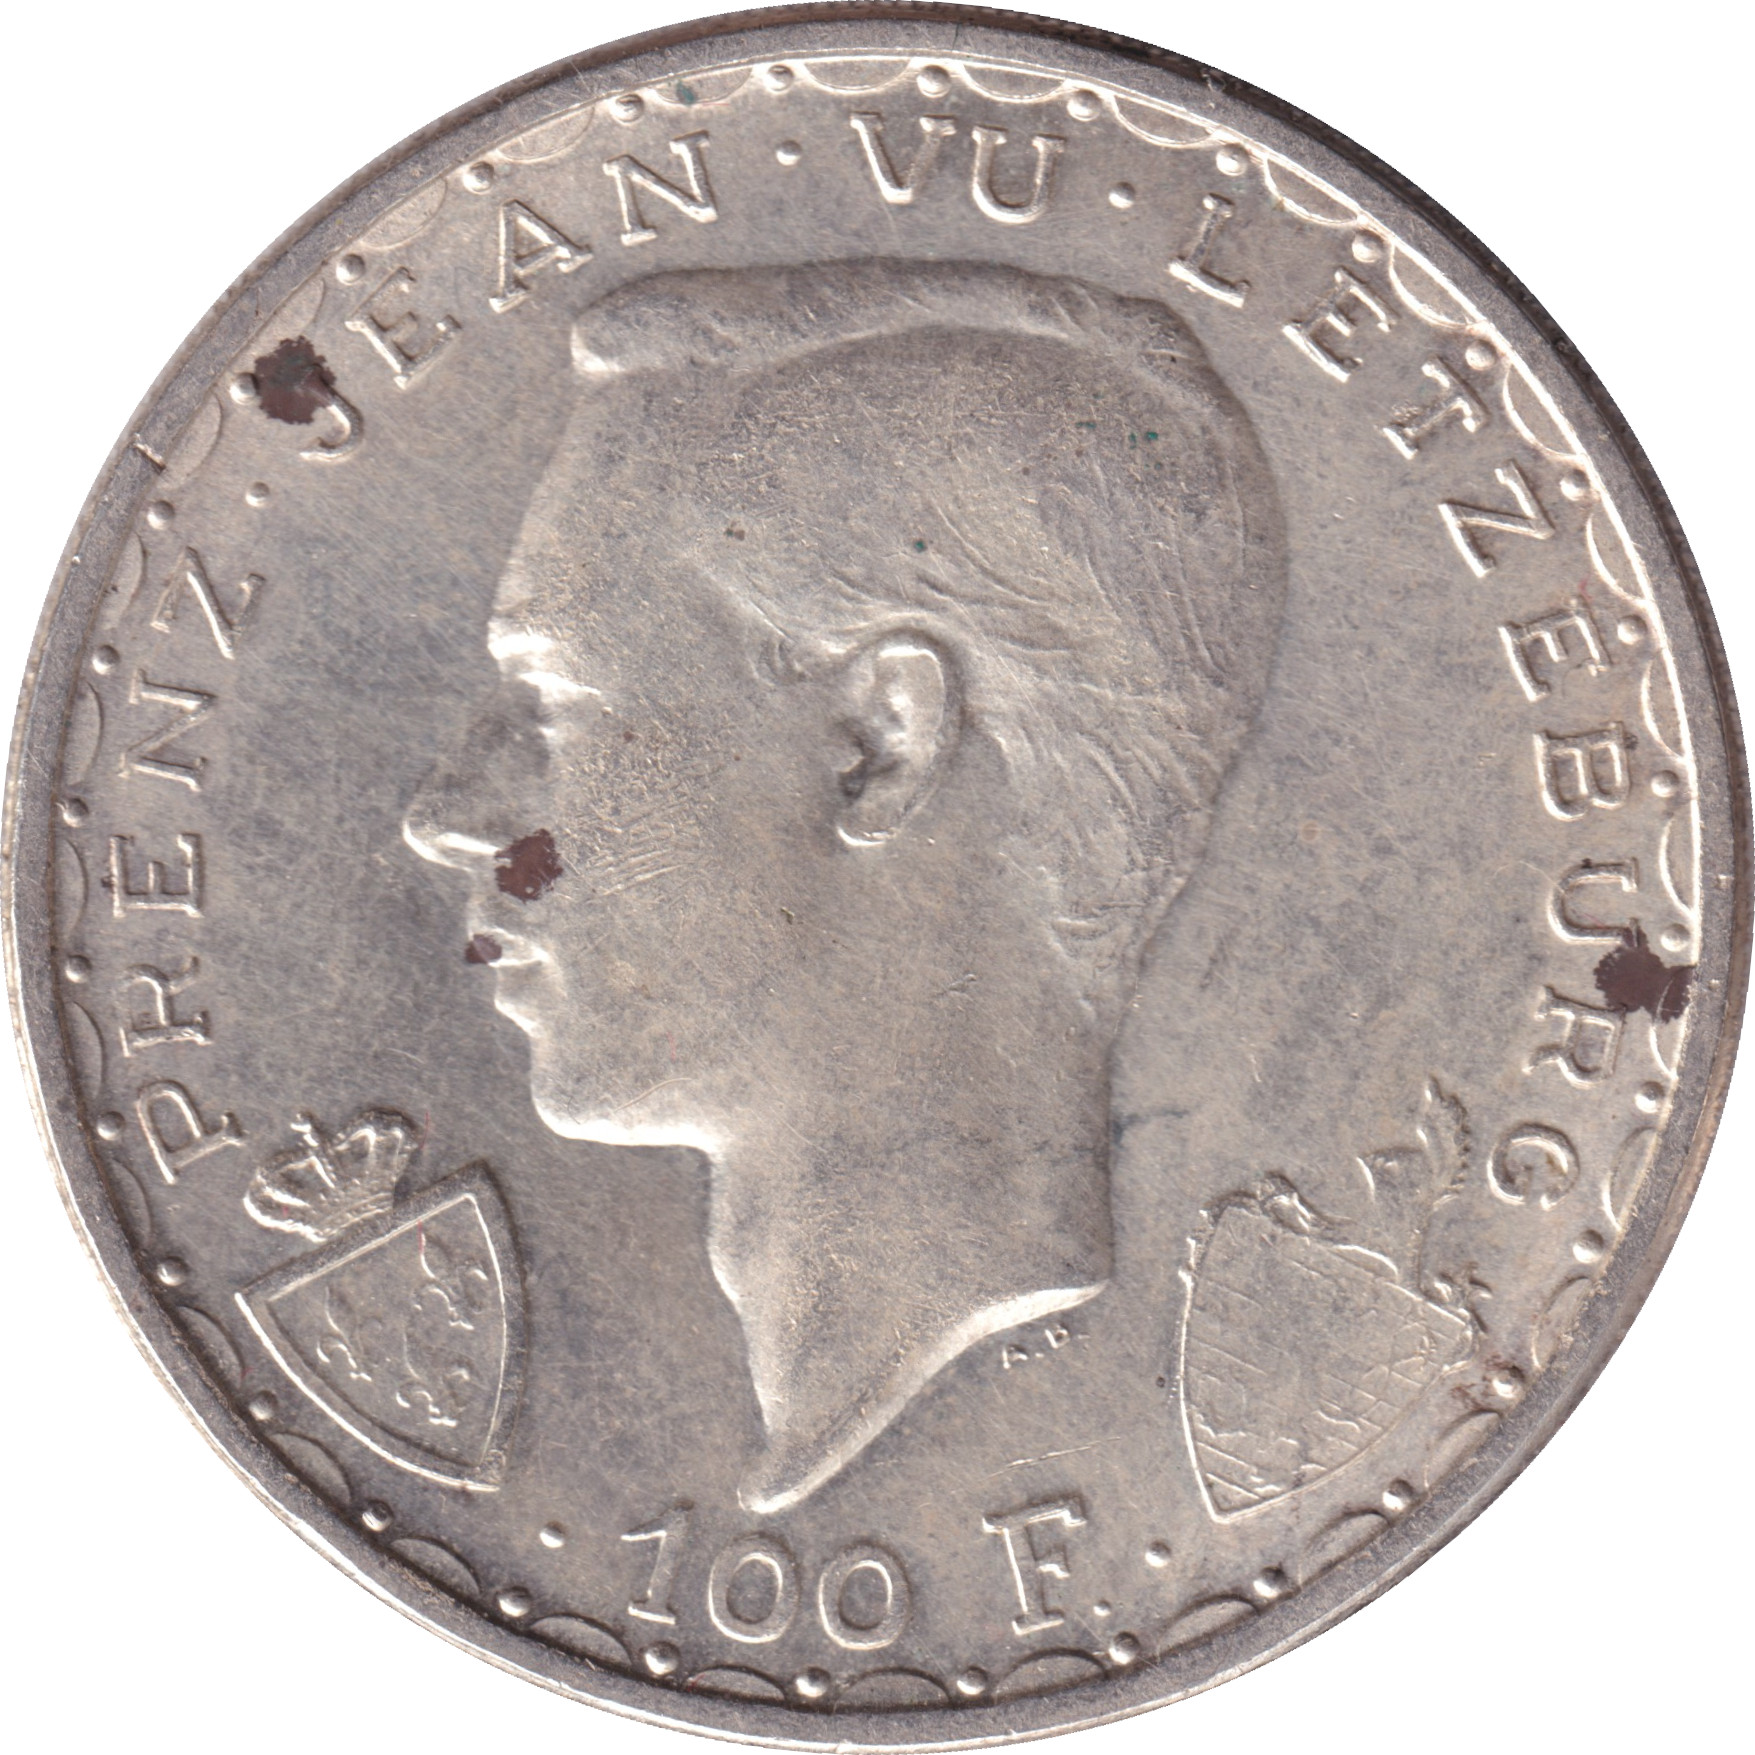 100 francs - Jean l'aveugle - 600 ans